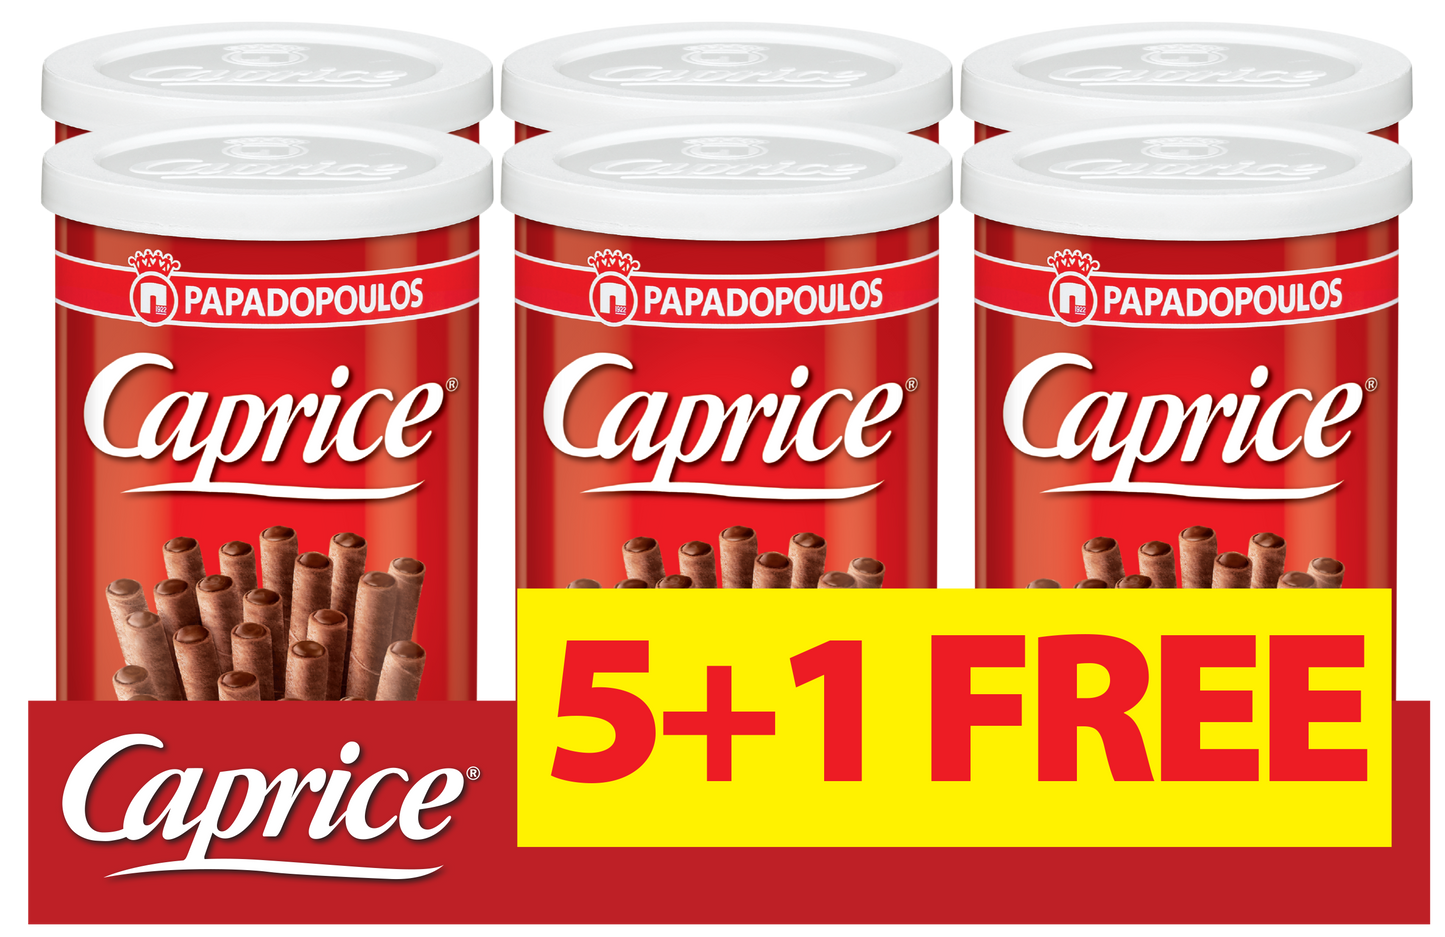 Caprice Classic 53gm 5+1 Free